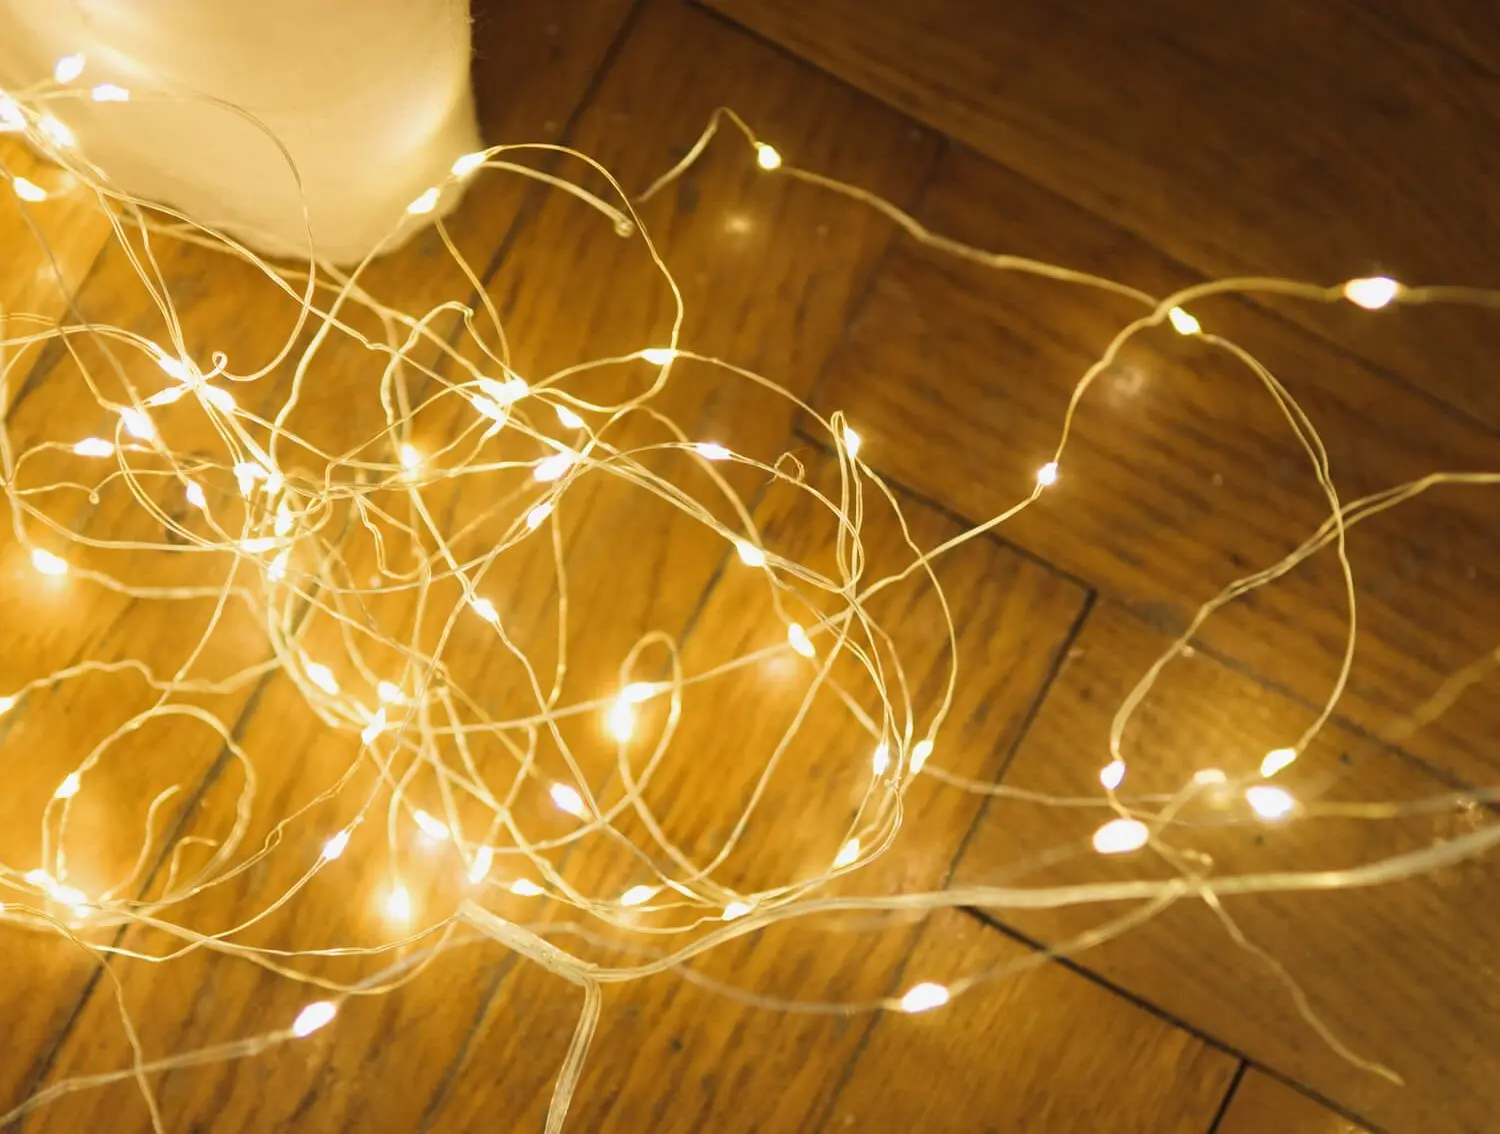 faulty string lighting tangled on hardwood floor of a bedroom